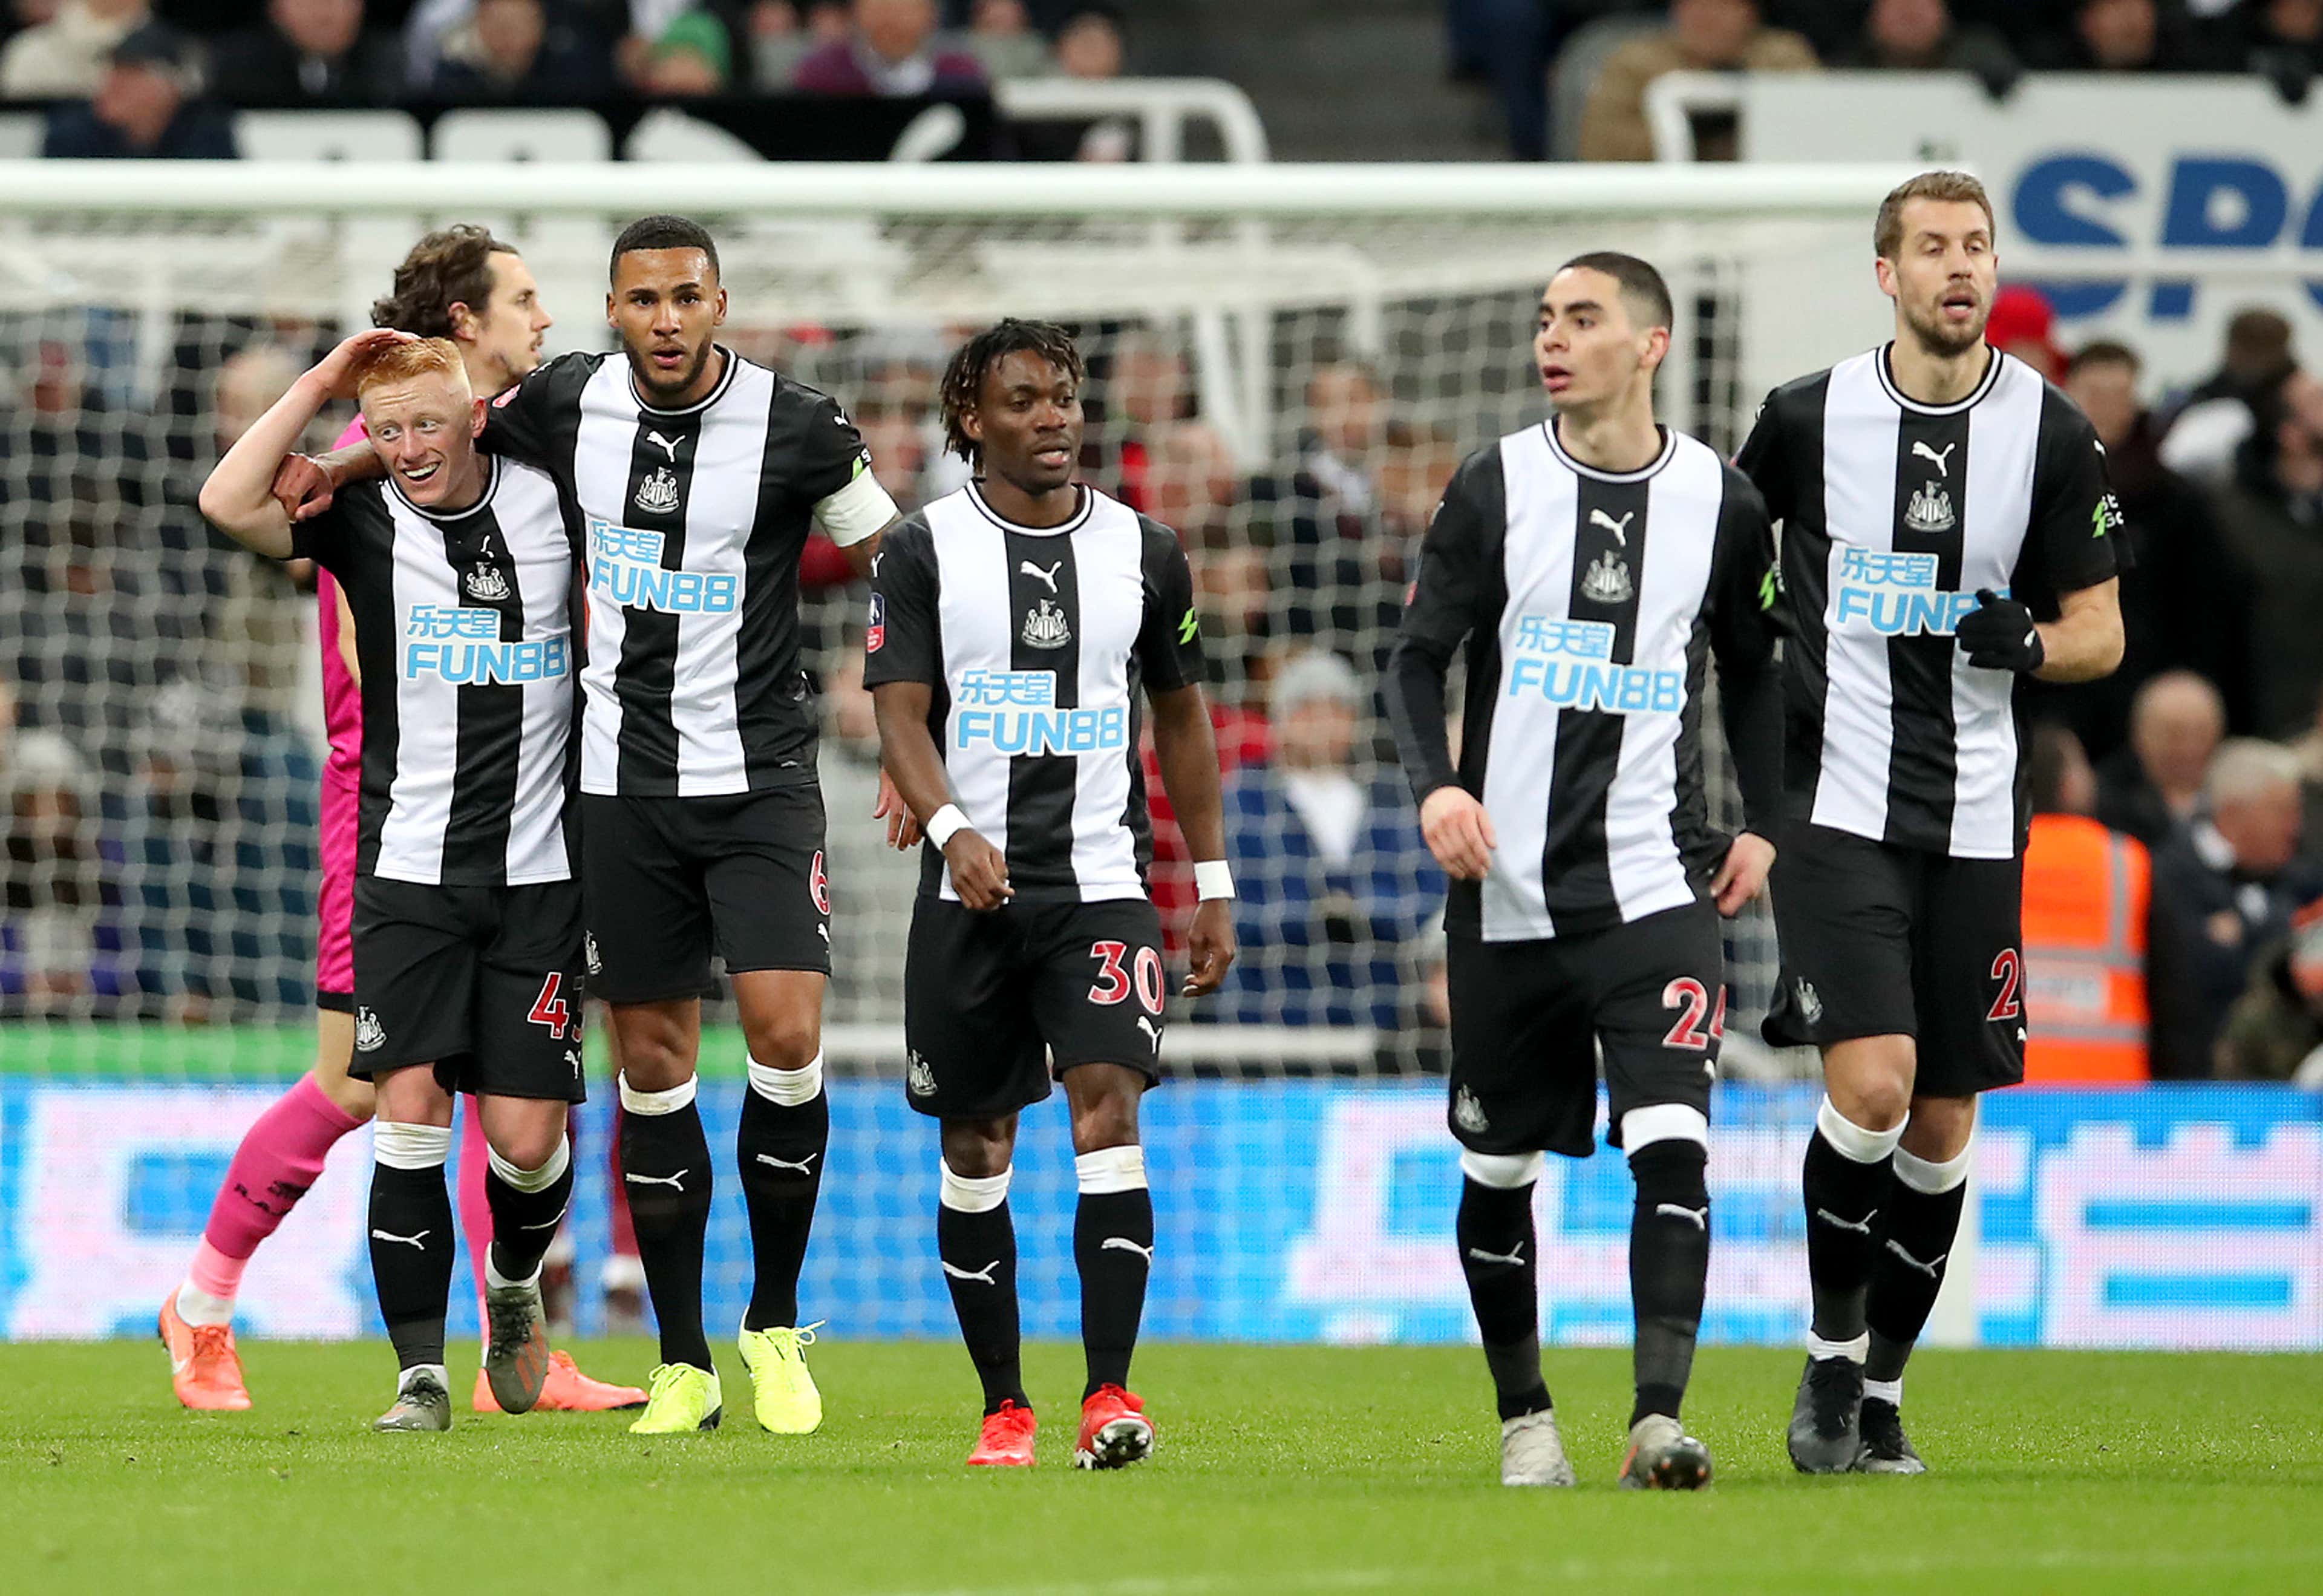 Allan Saint-Maximin blames Newcastle United team-mates for lack of